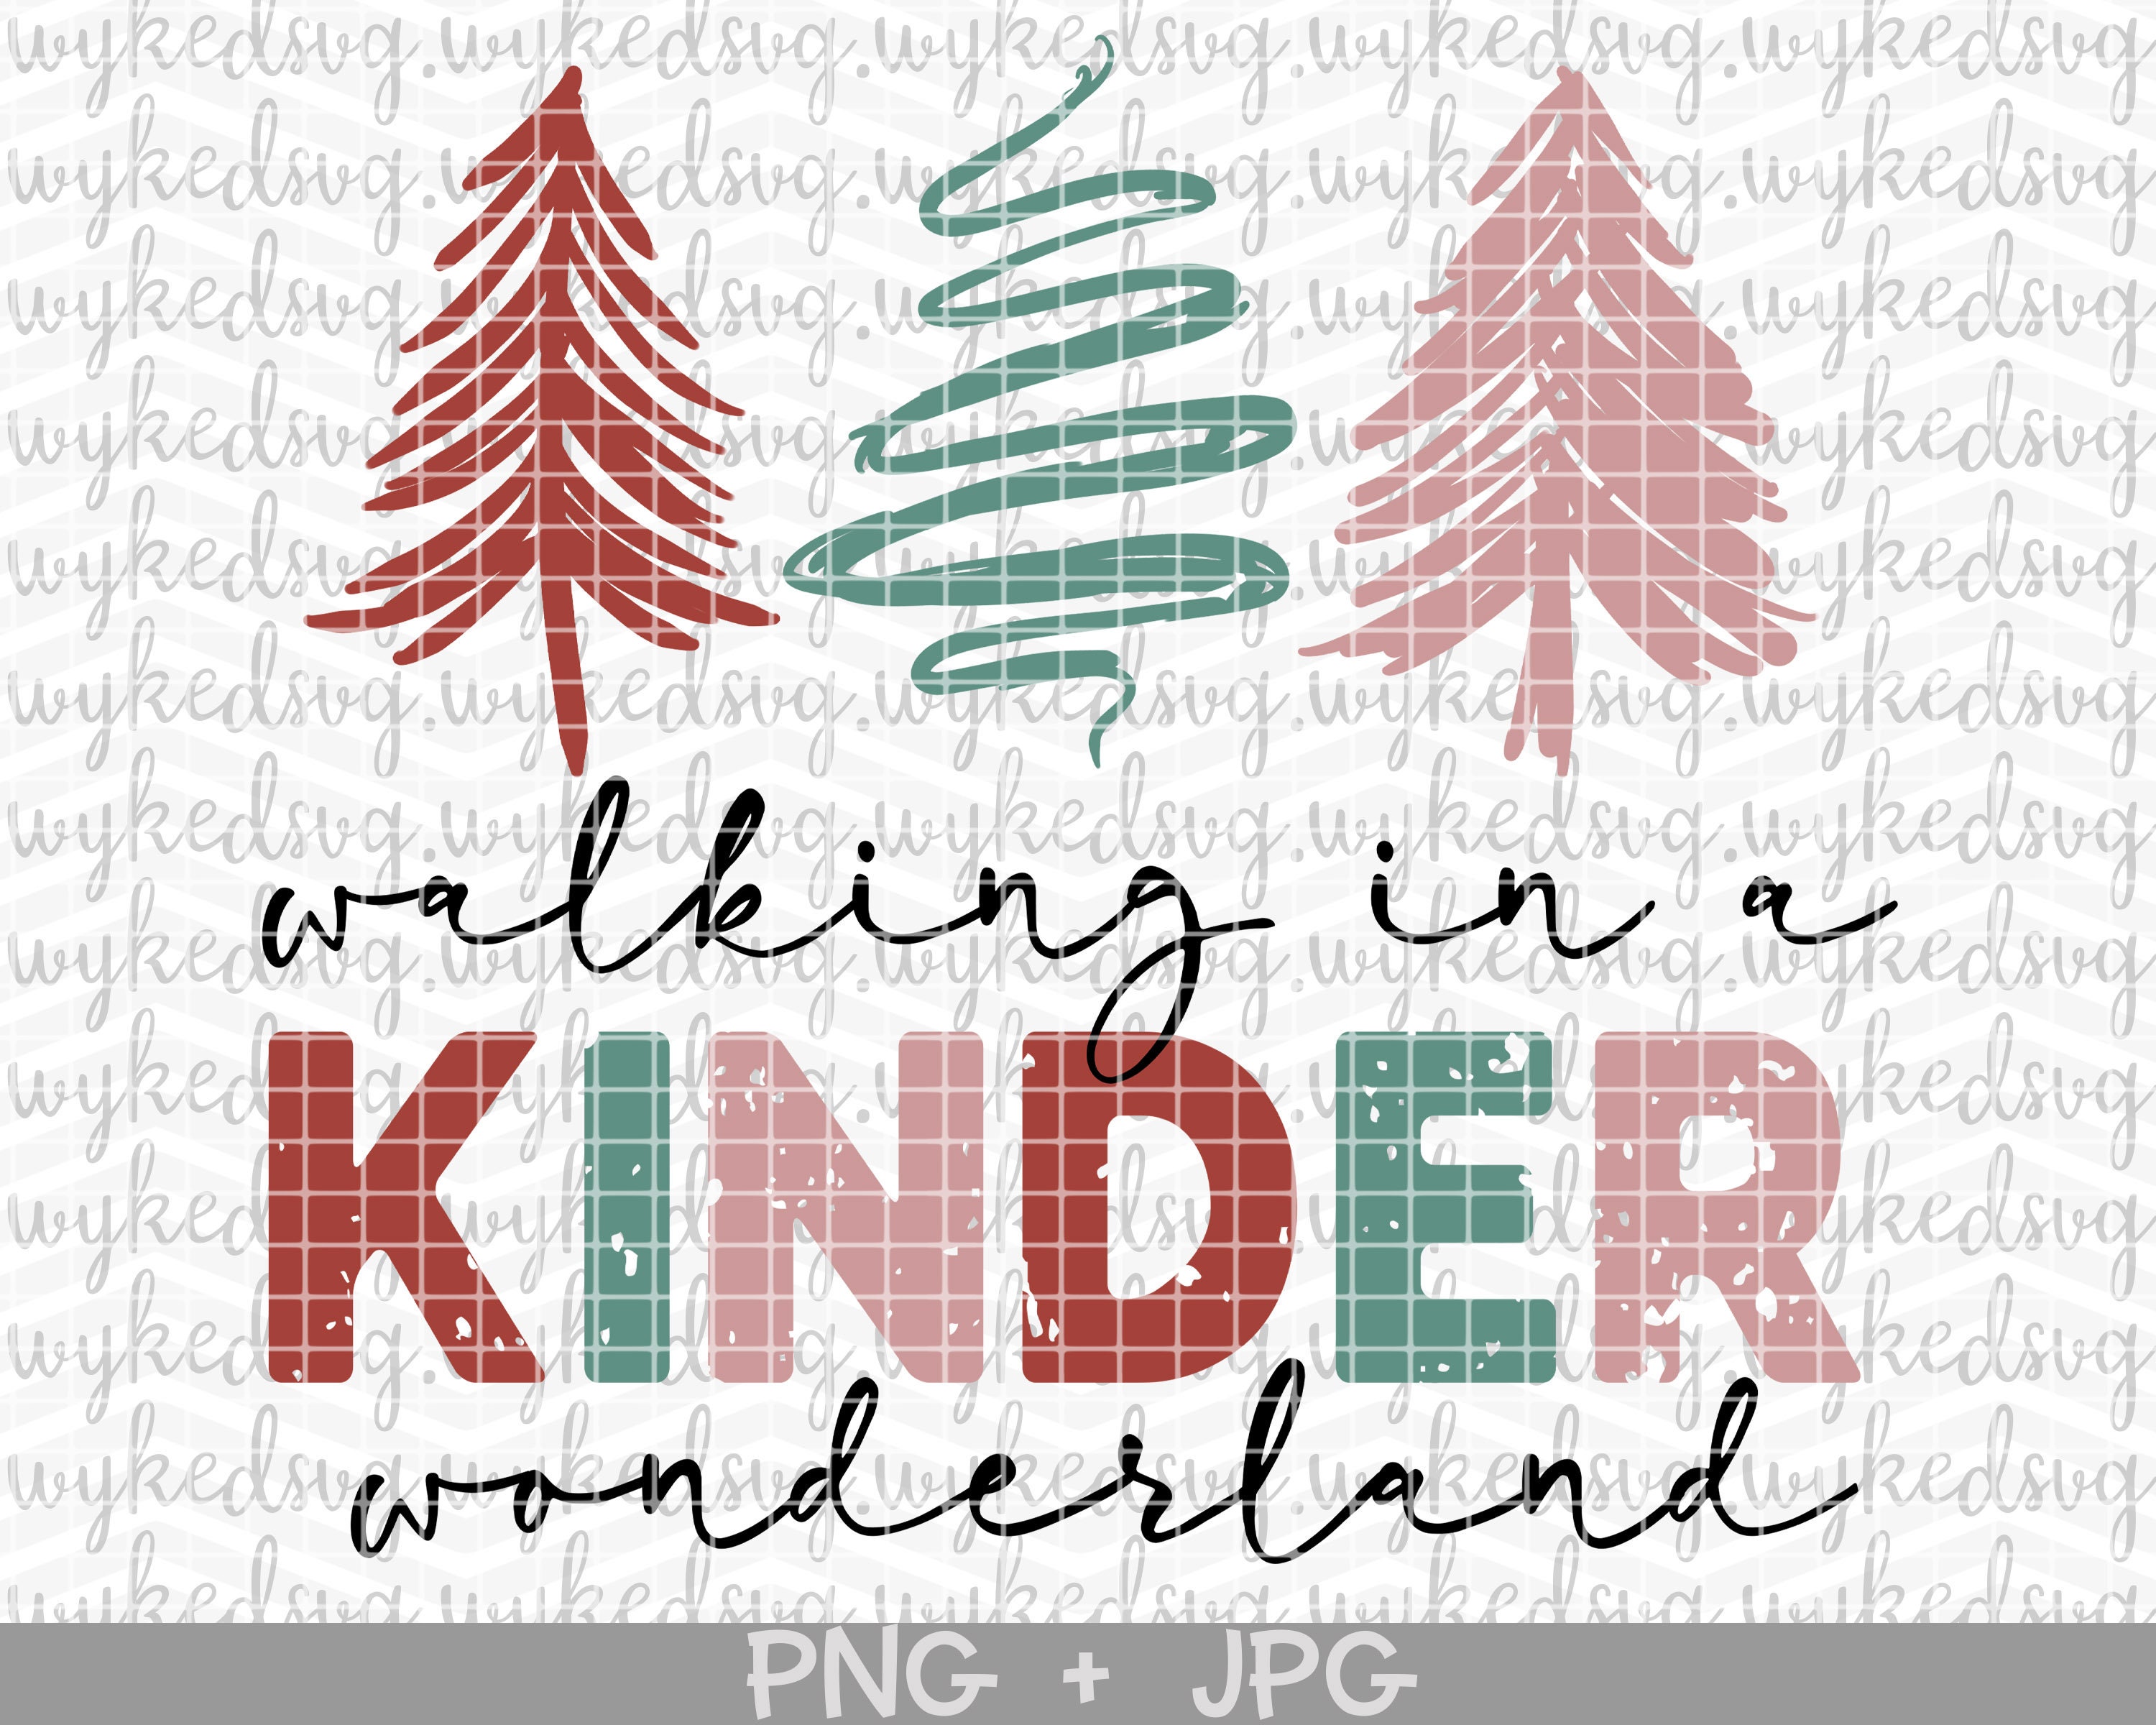 Winter Wonderland Banner- Editable- Christmas- Pastel by Elementary MyDear